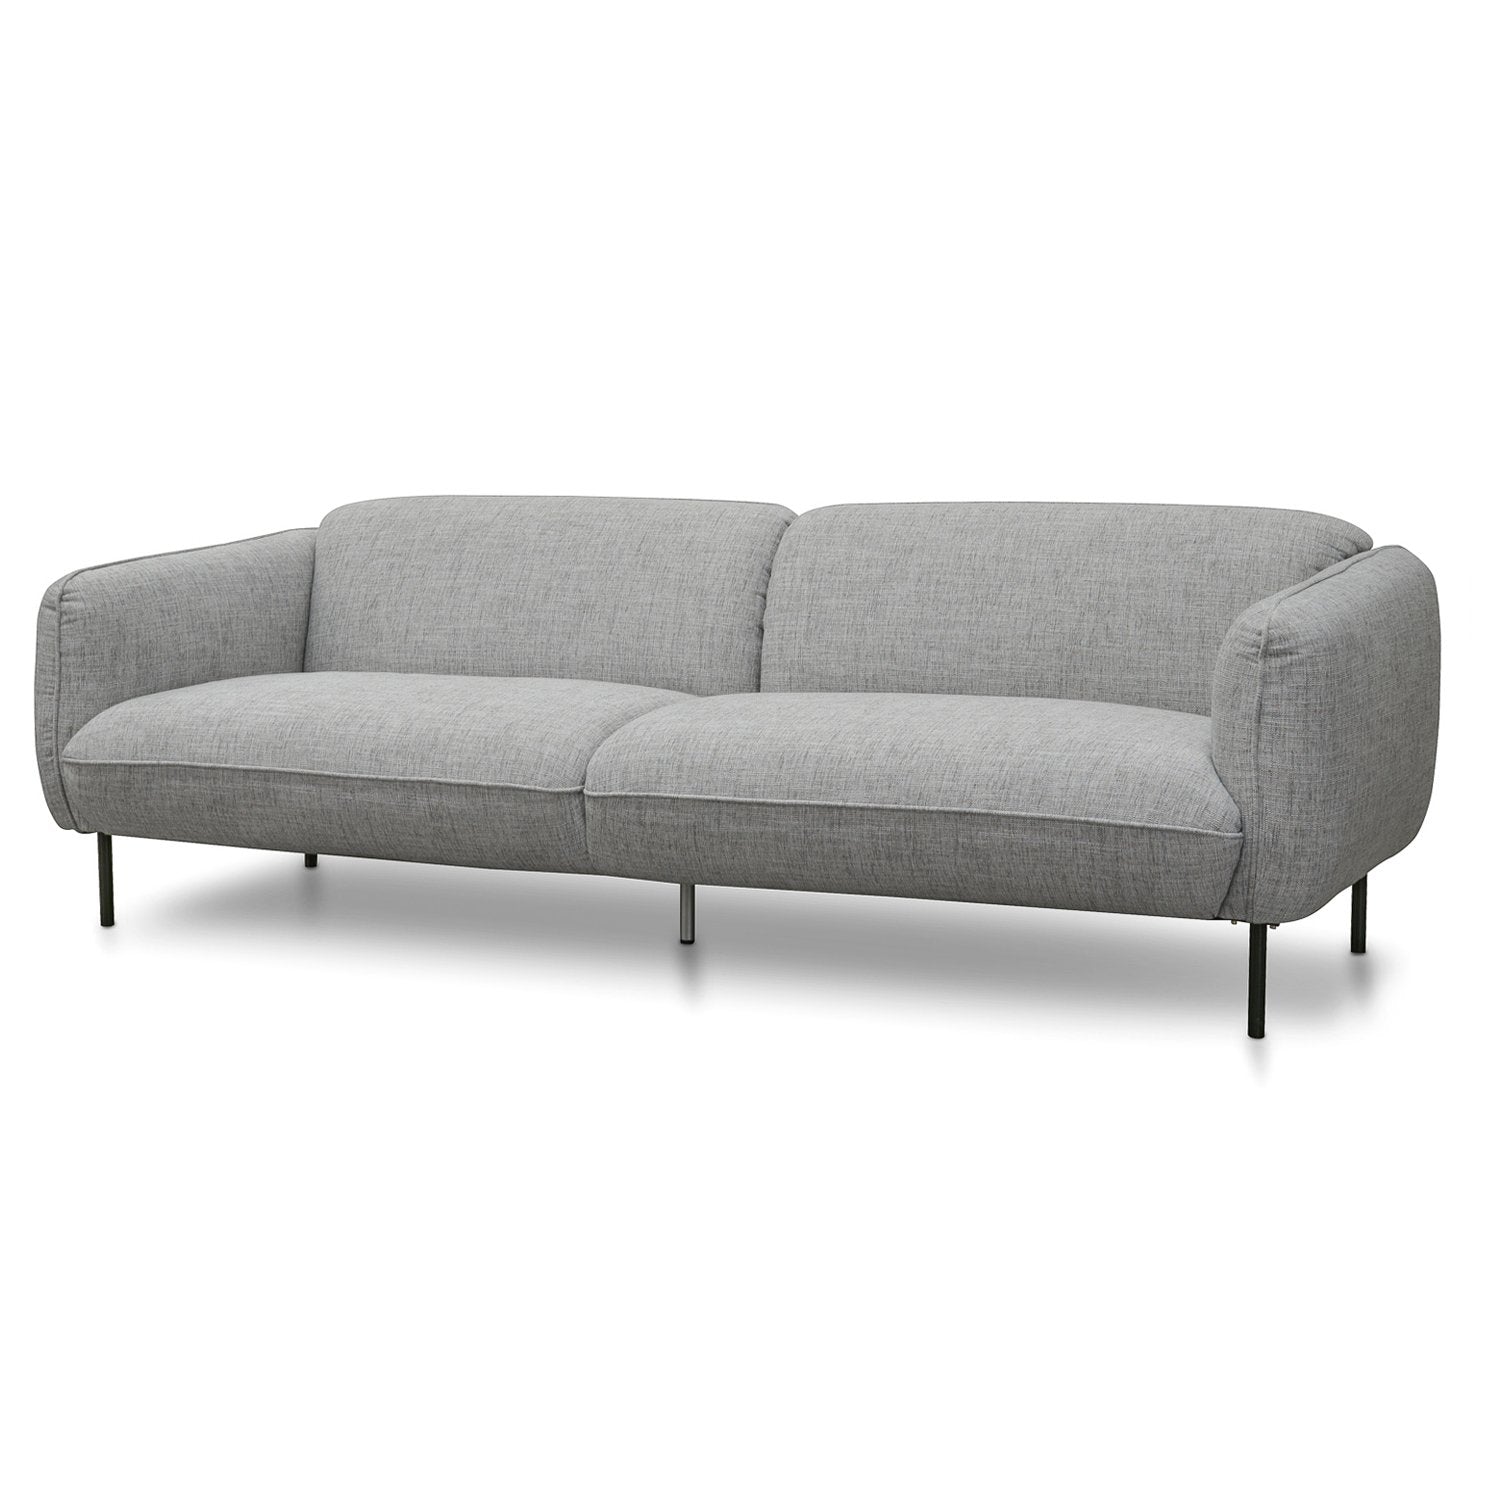 Valentina - 3 Seater Sofa - Light spec grey fabric